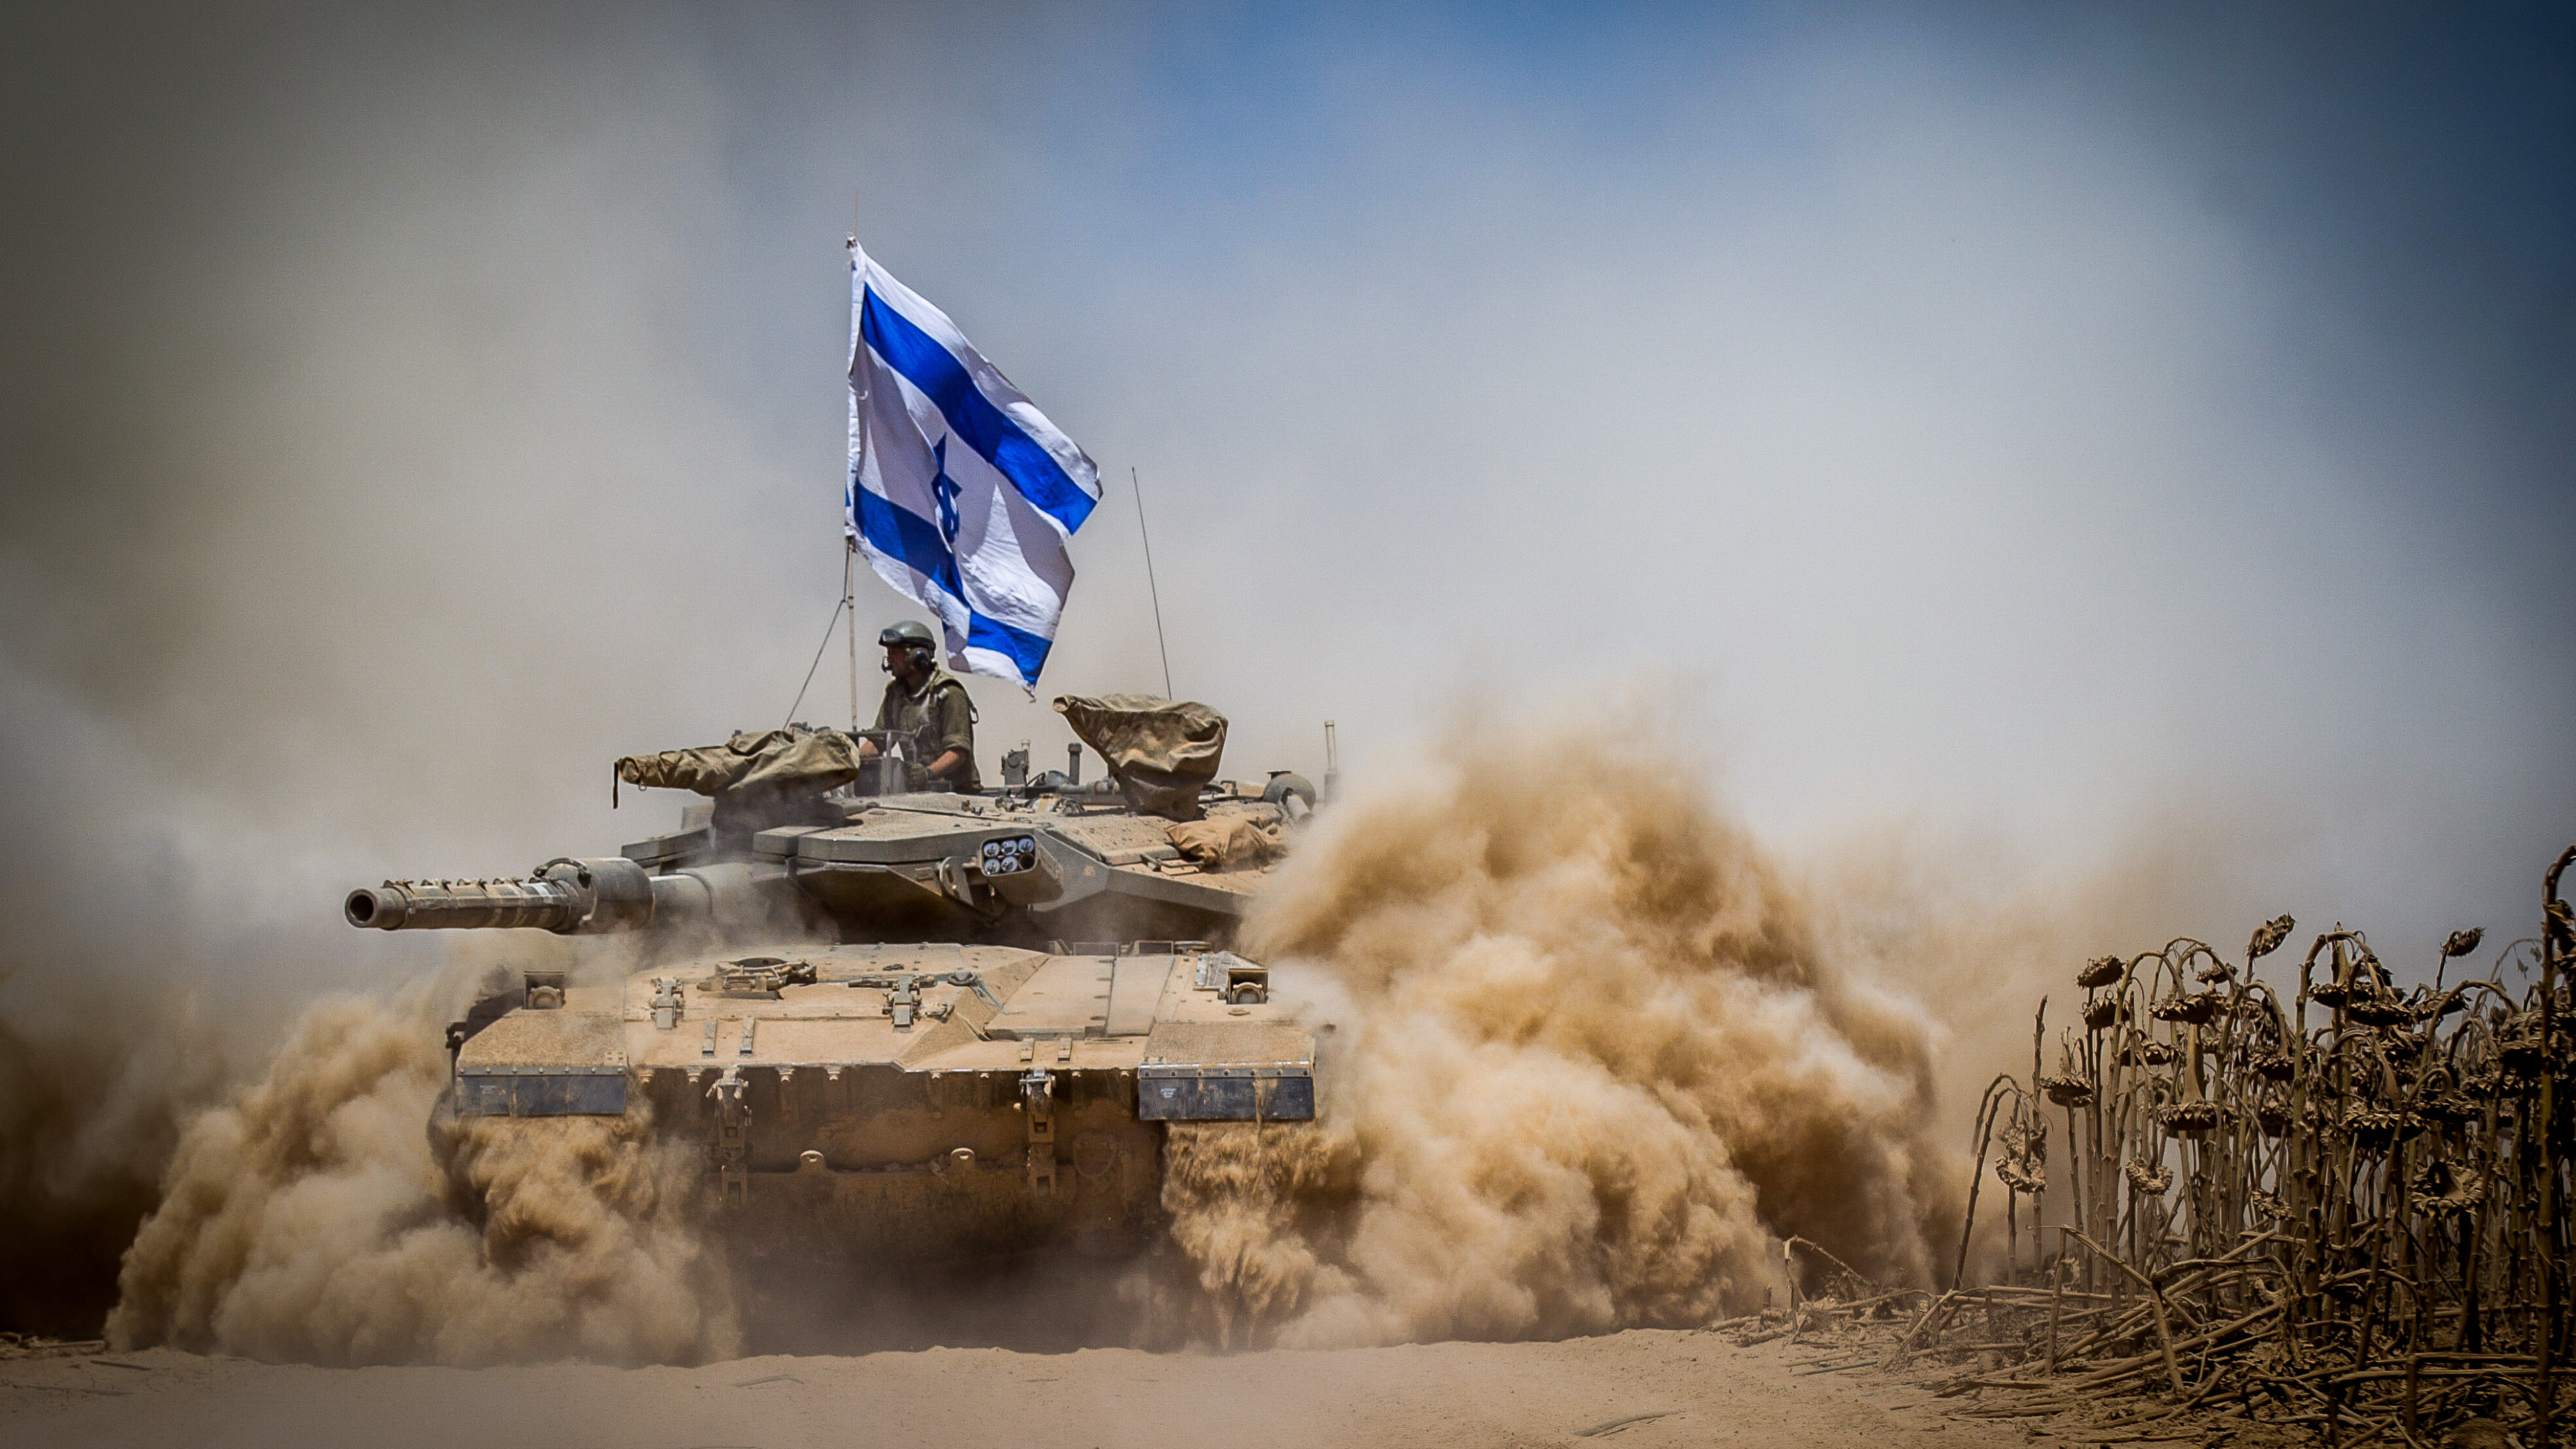 Wallpaper Merkava Mark IV, tank, flag, Israel Army, Israel Defense Forces,  desert, Military #10111 - Page 8